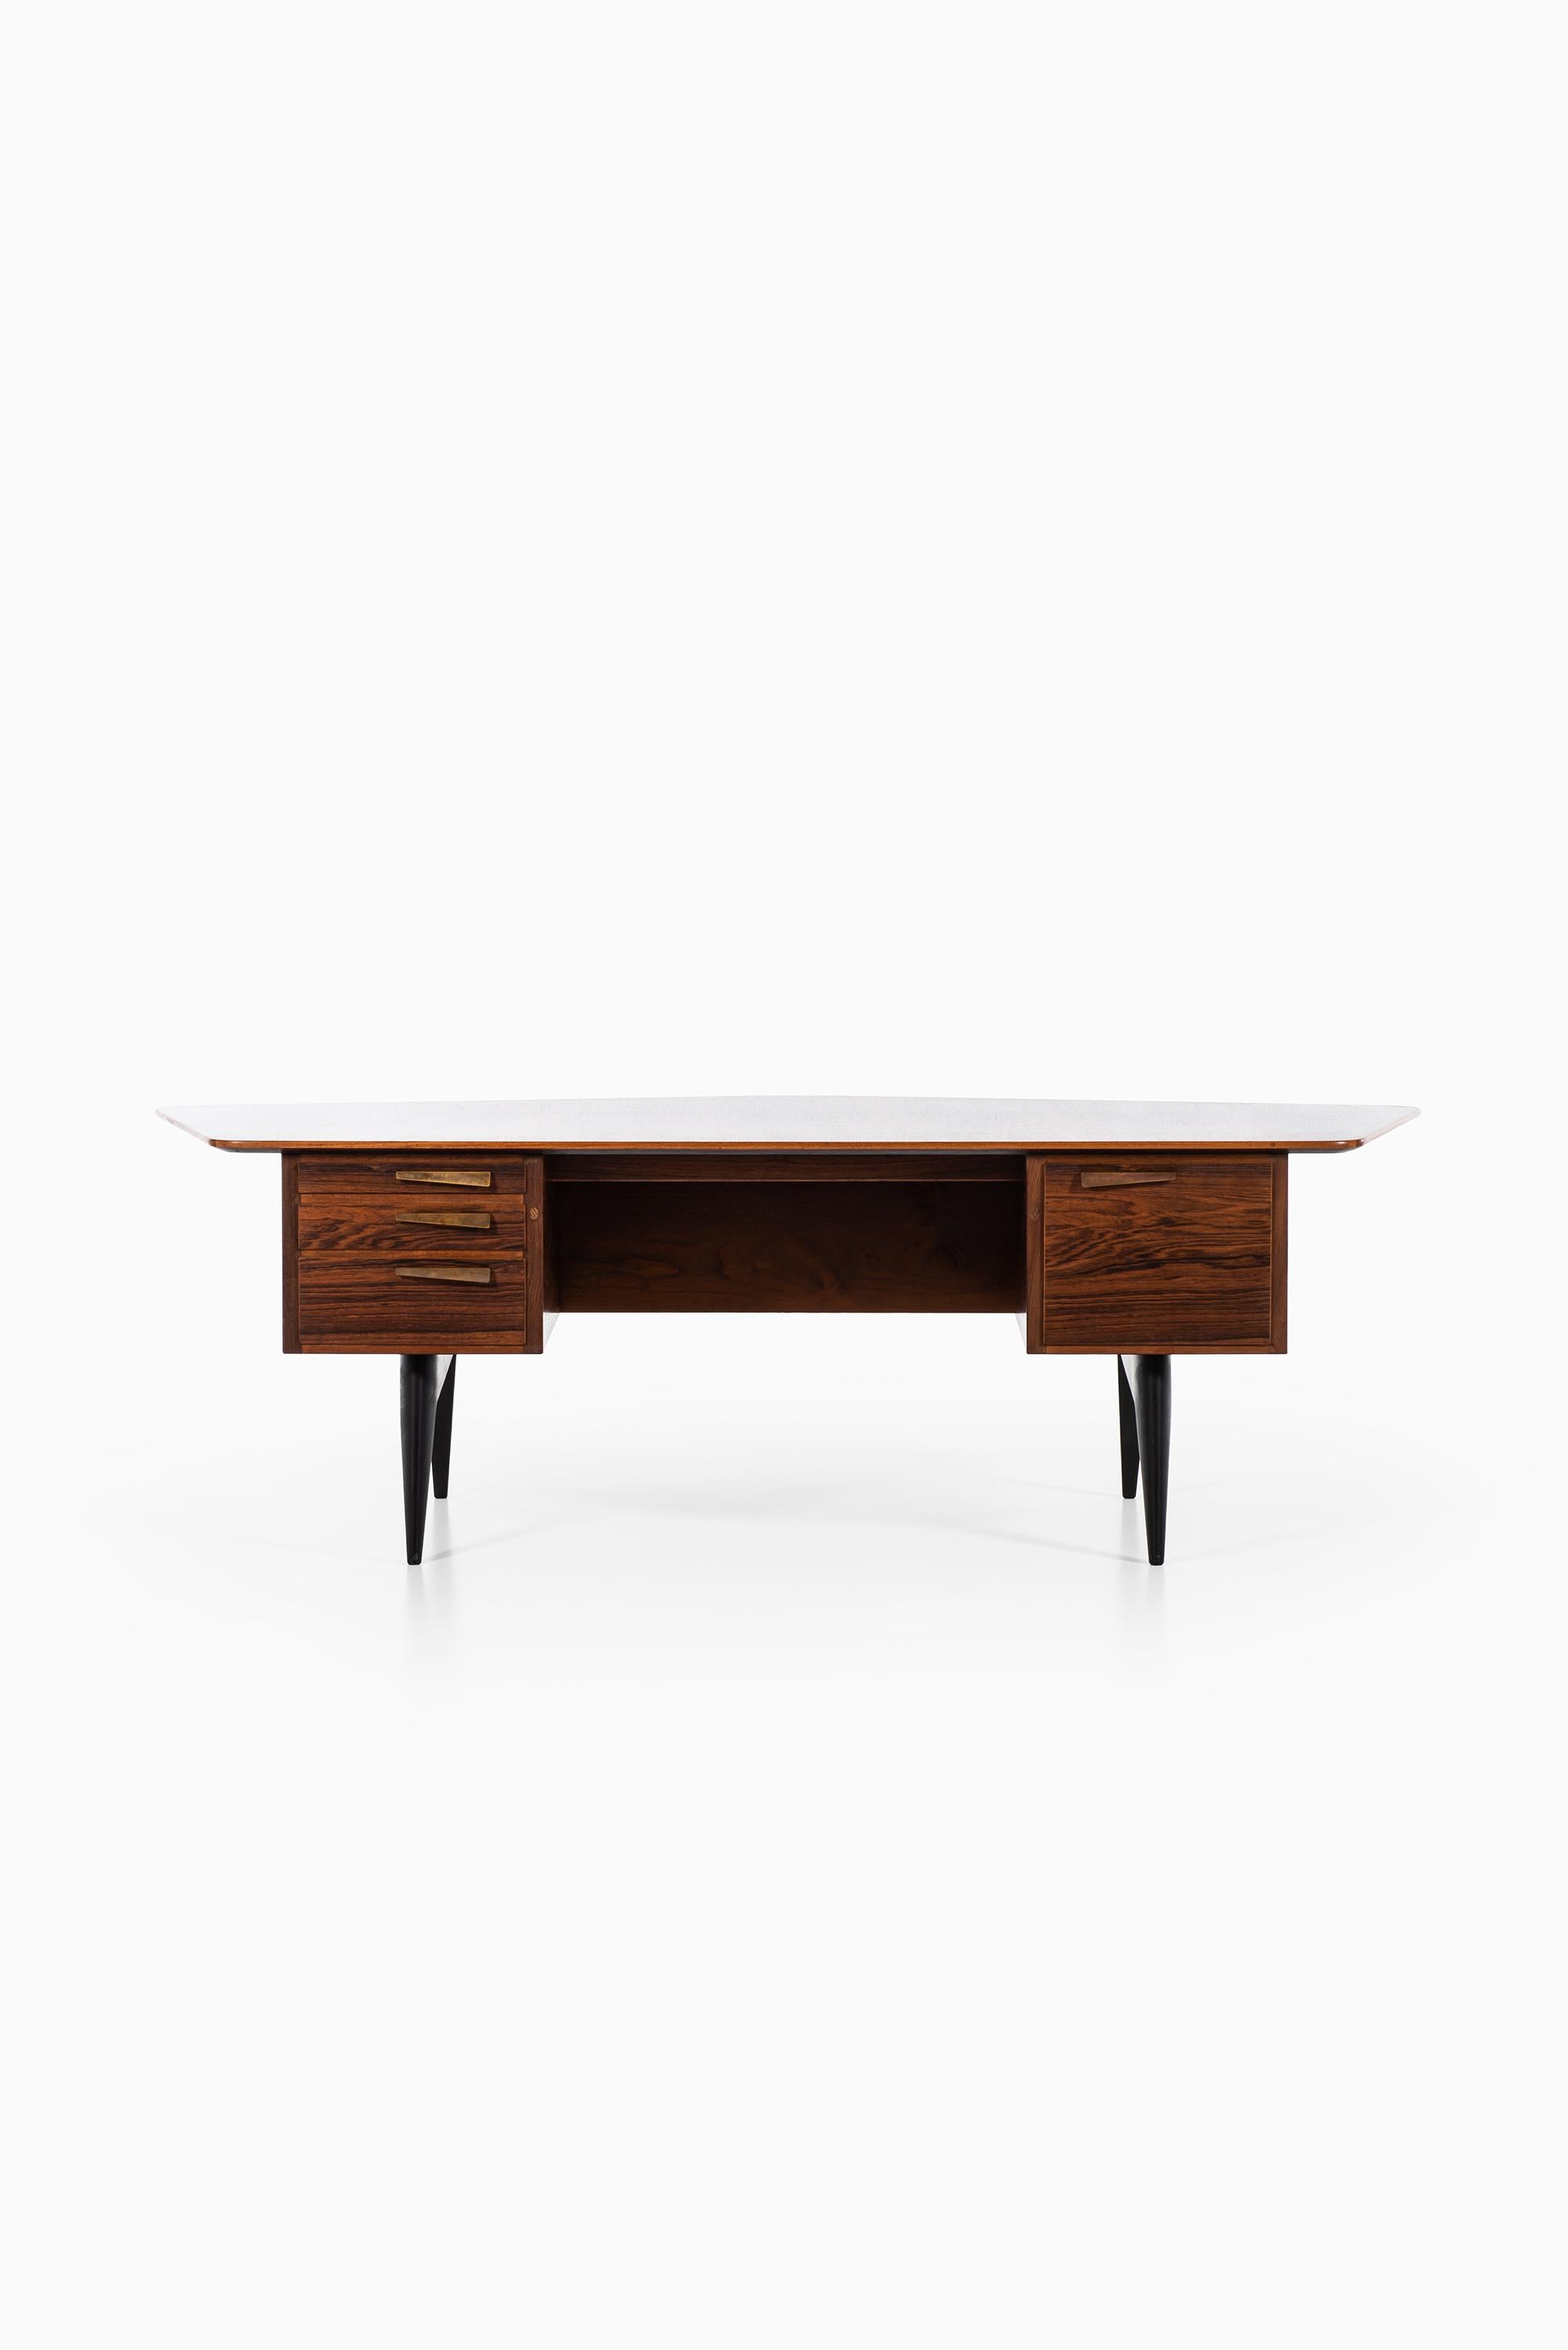 Rare desk designed by Hadar Schmidt. Produced by Hadar Schmidt in Sweden.